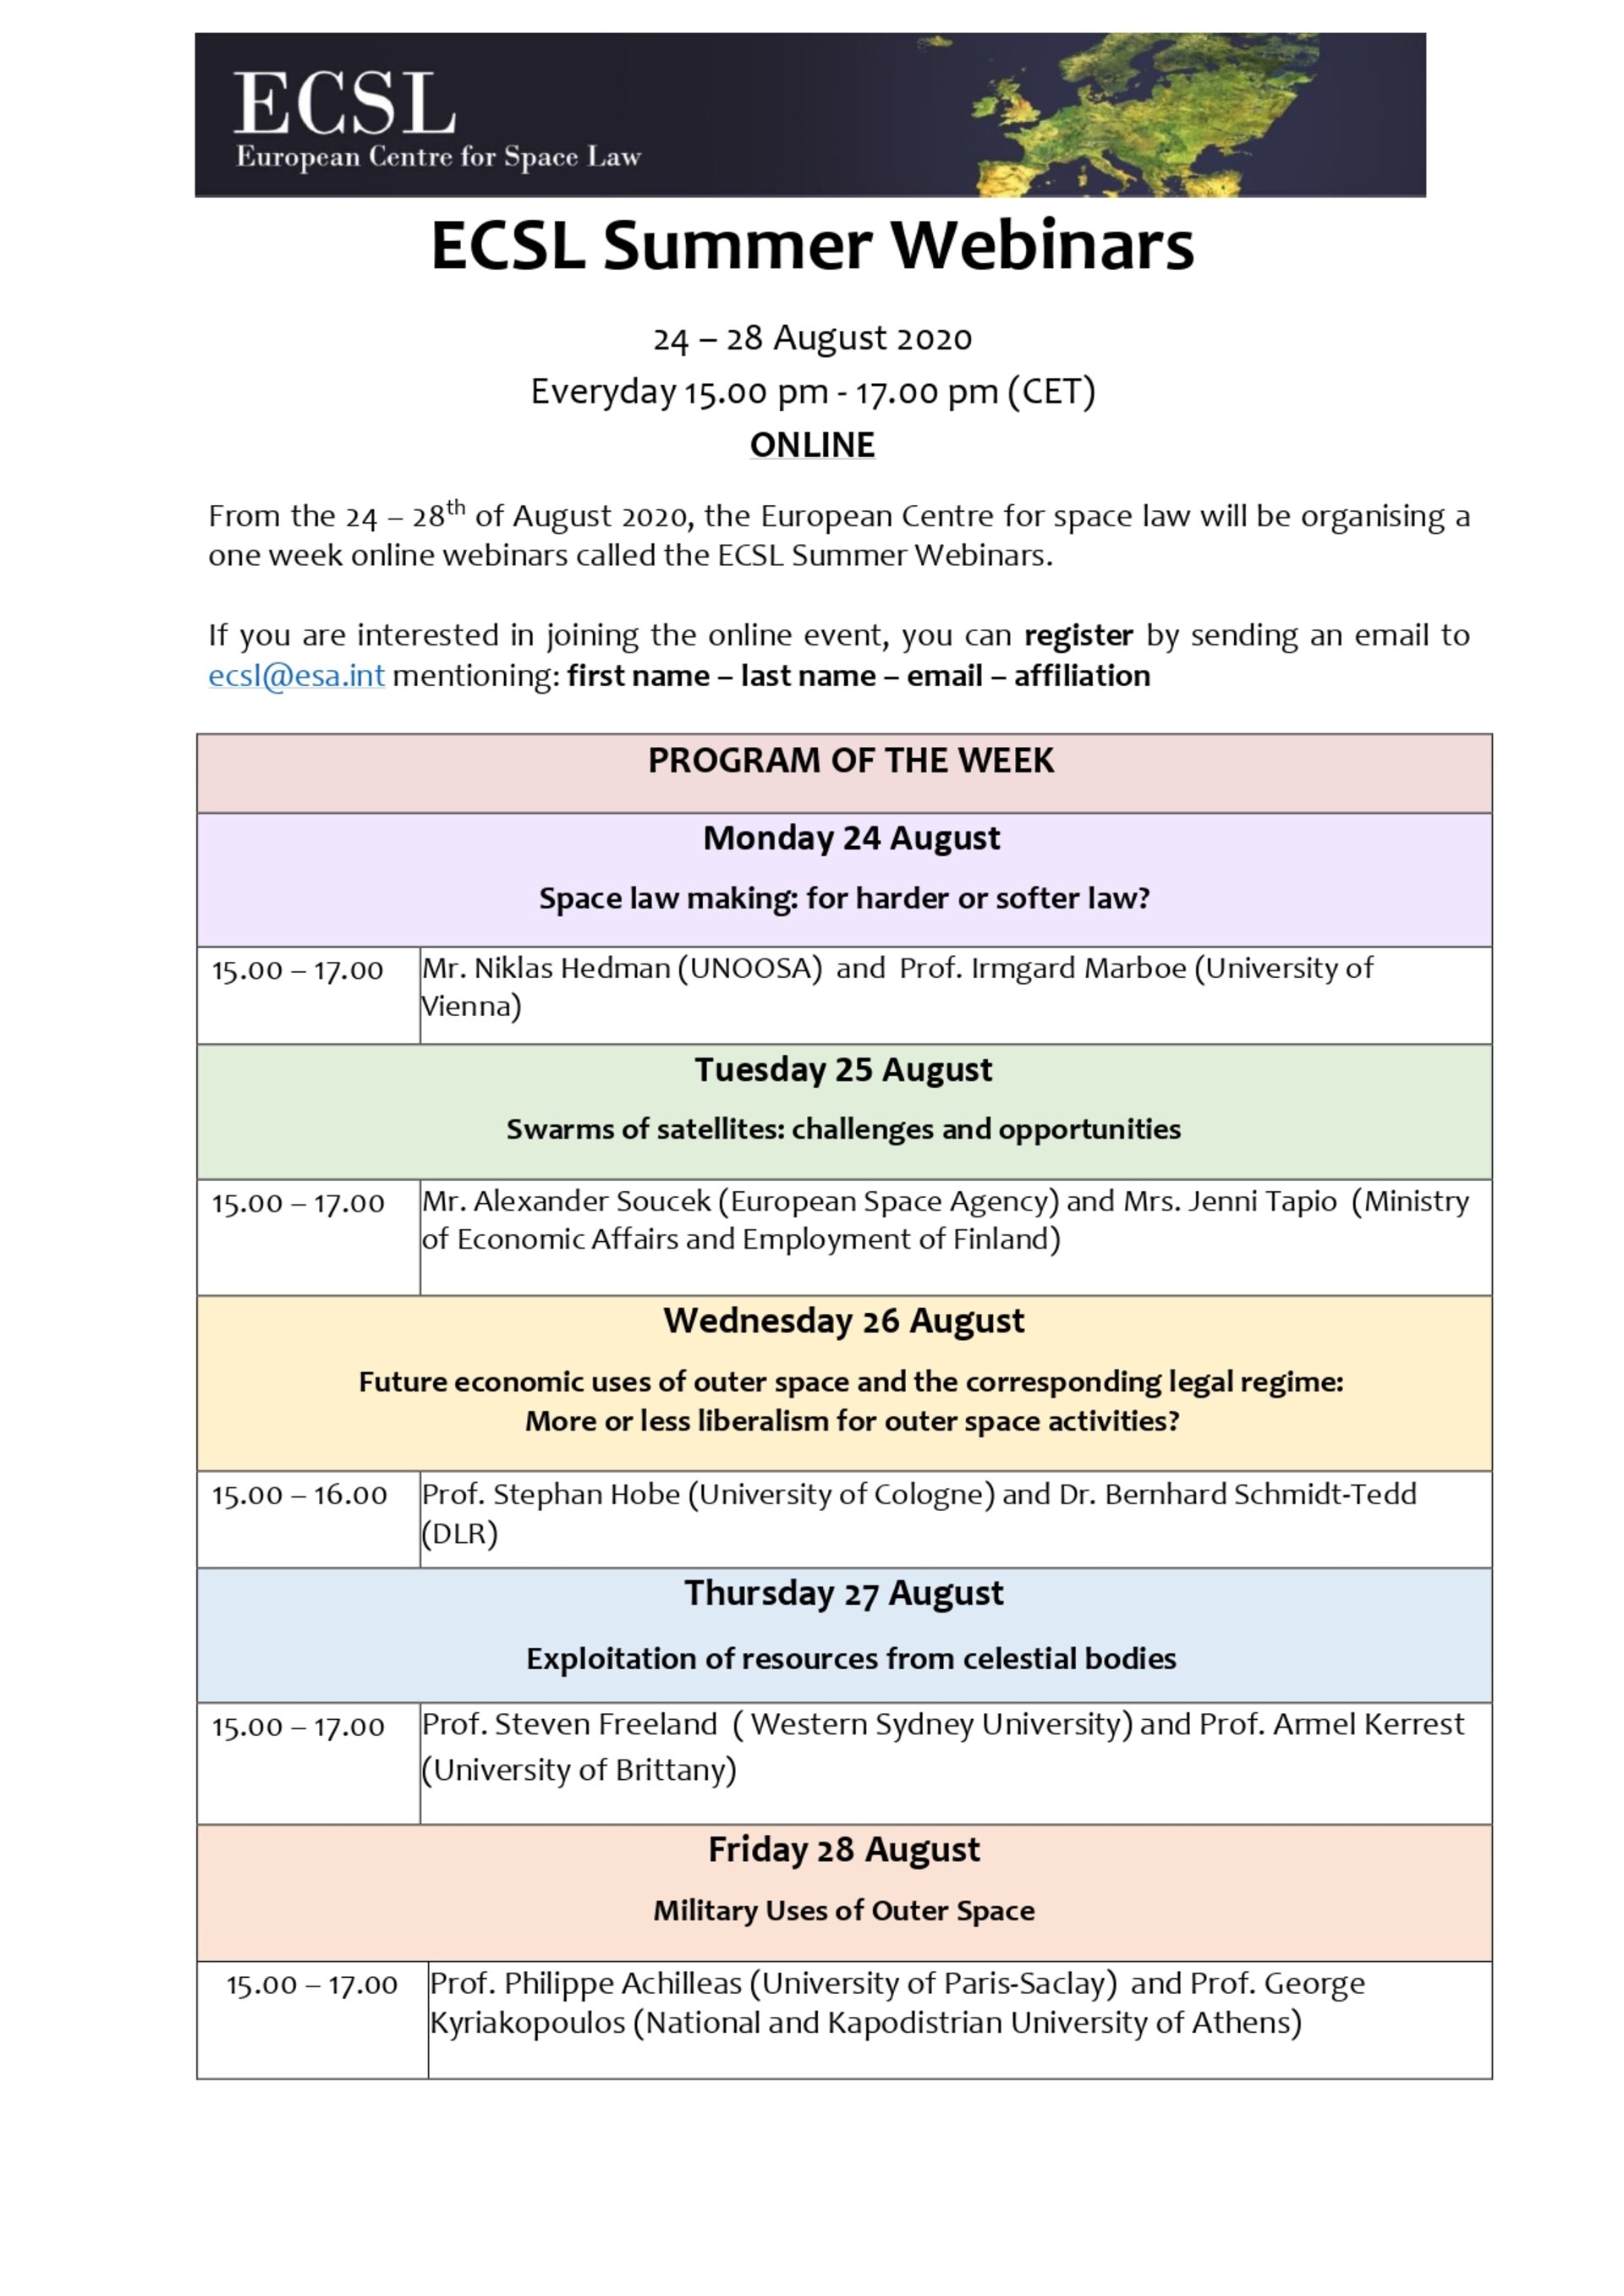 ECSL Summer Webinars - Program 